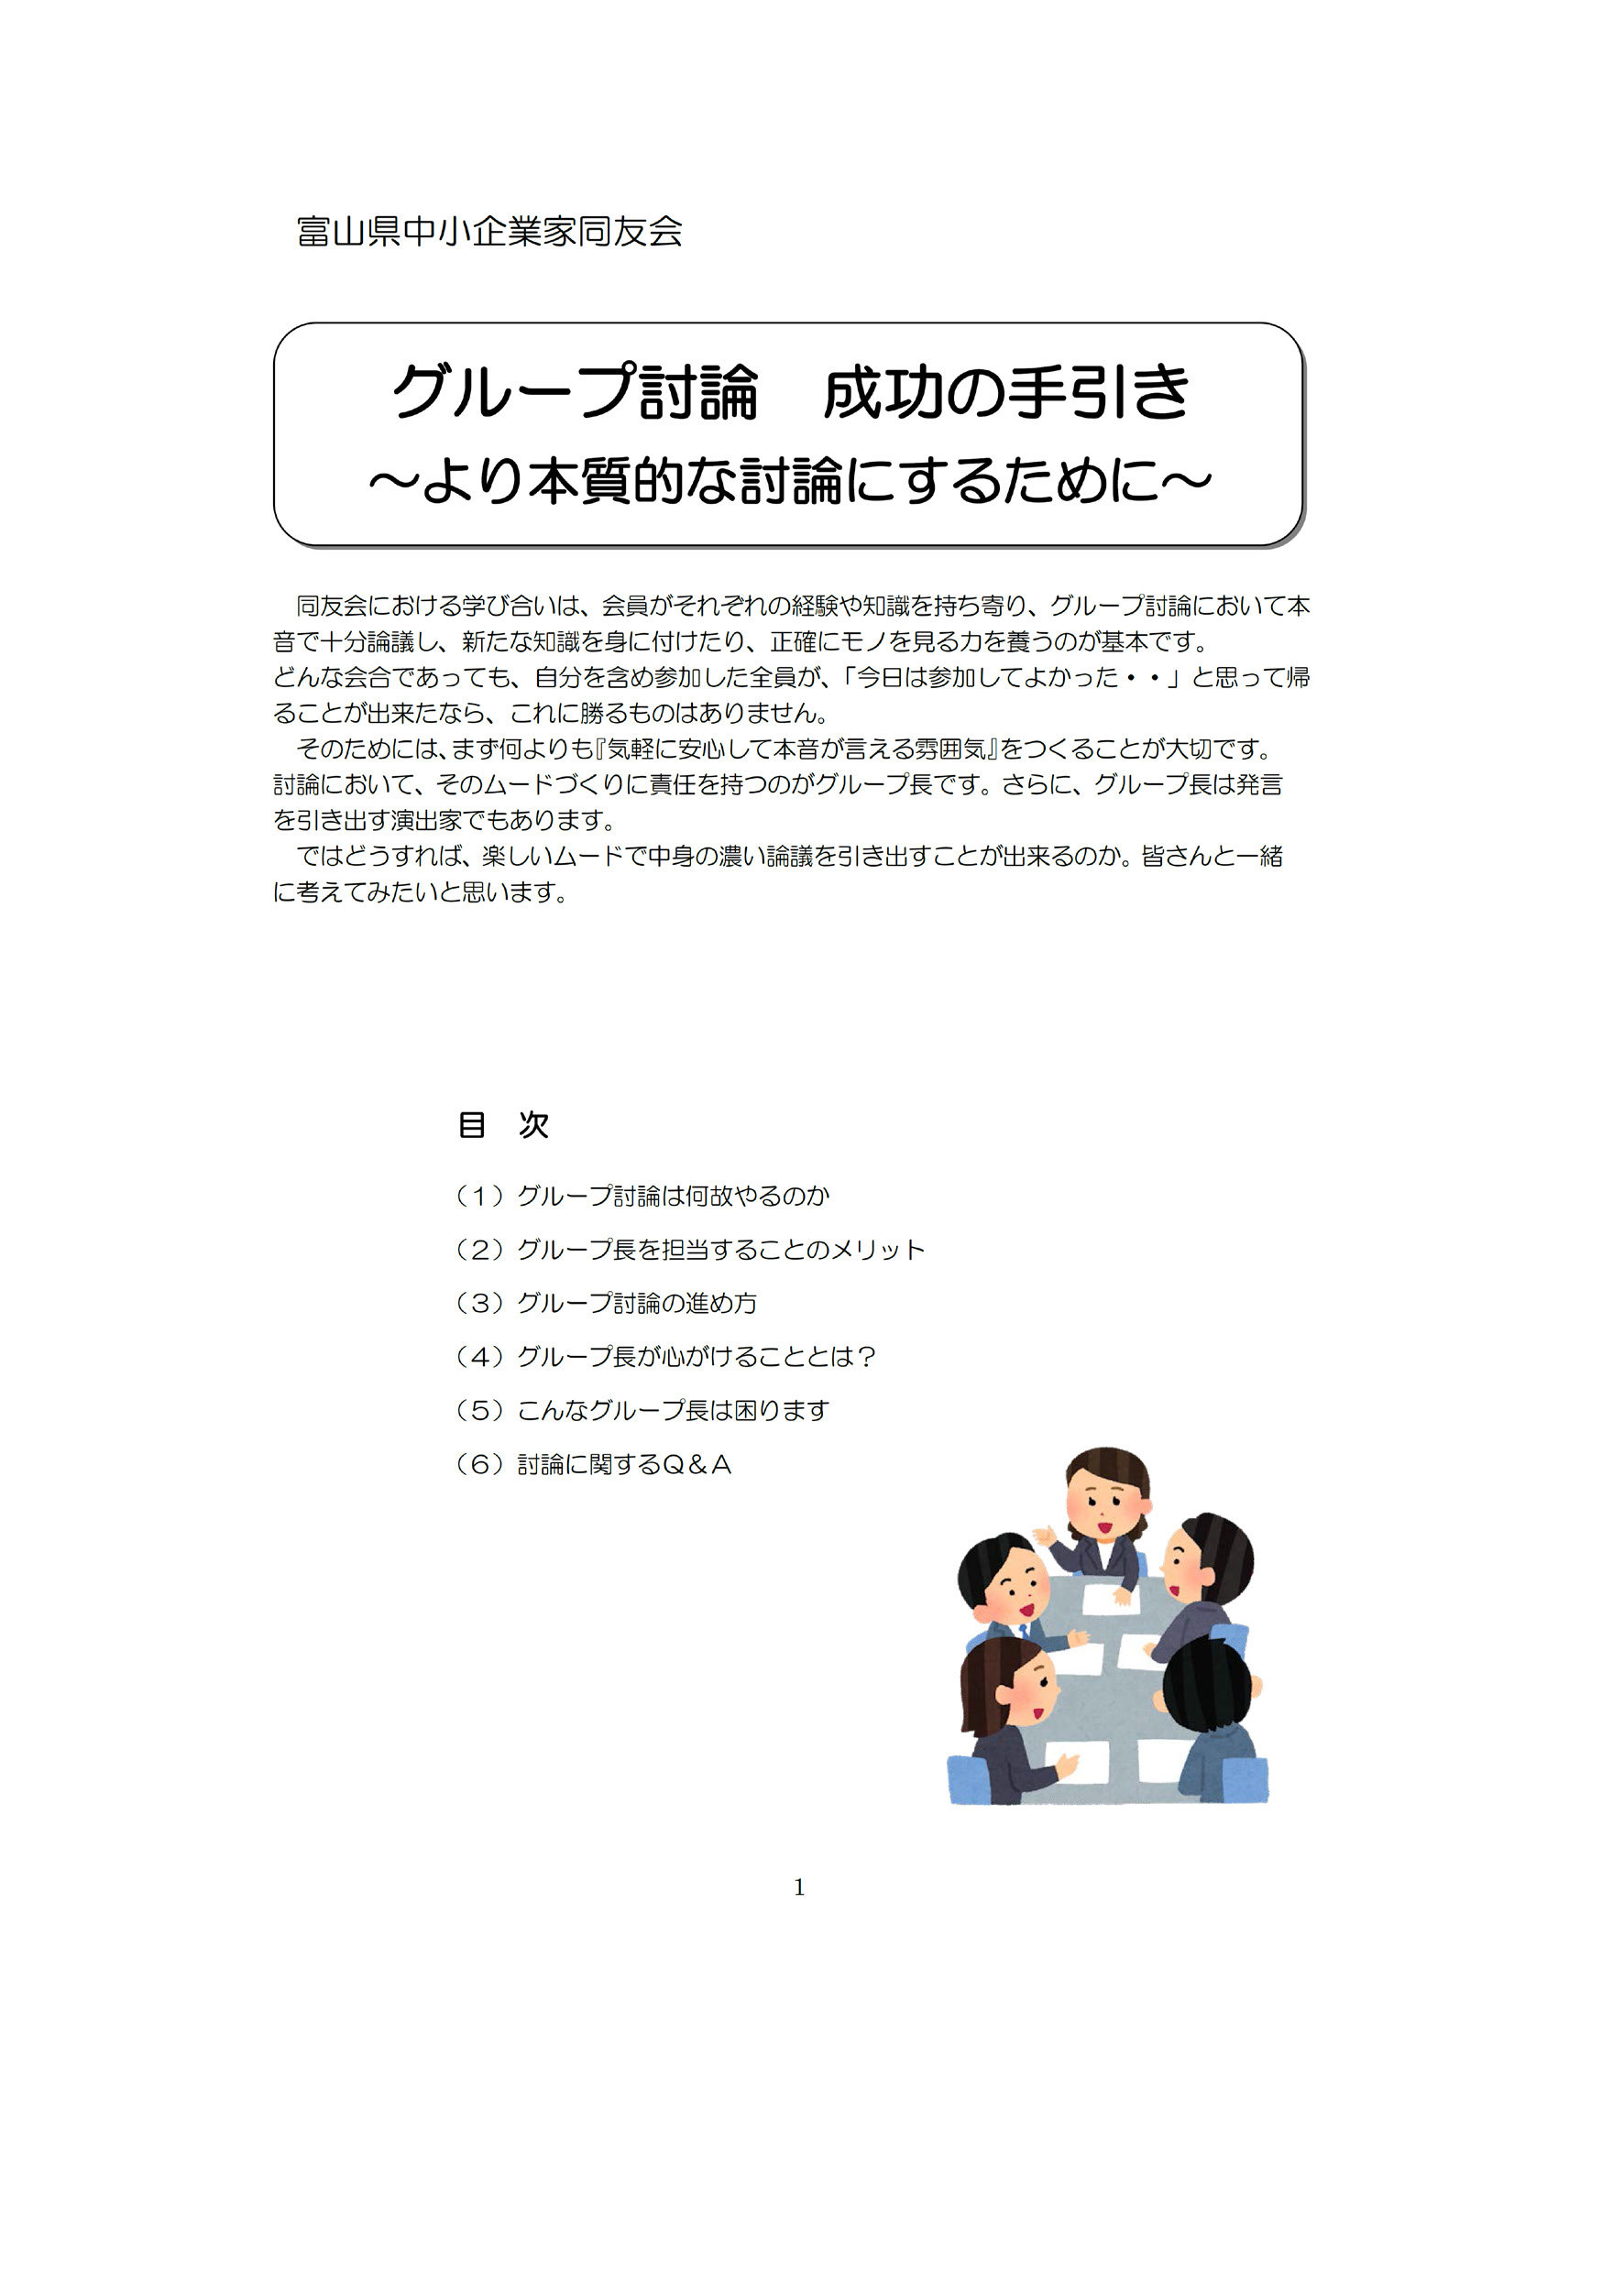 https://toyama.doyu.jp/activity/images/Book1.jpg